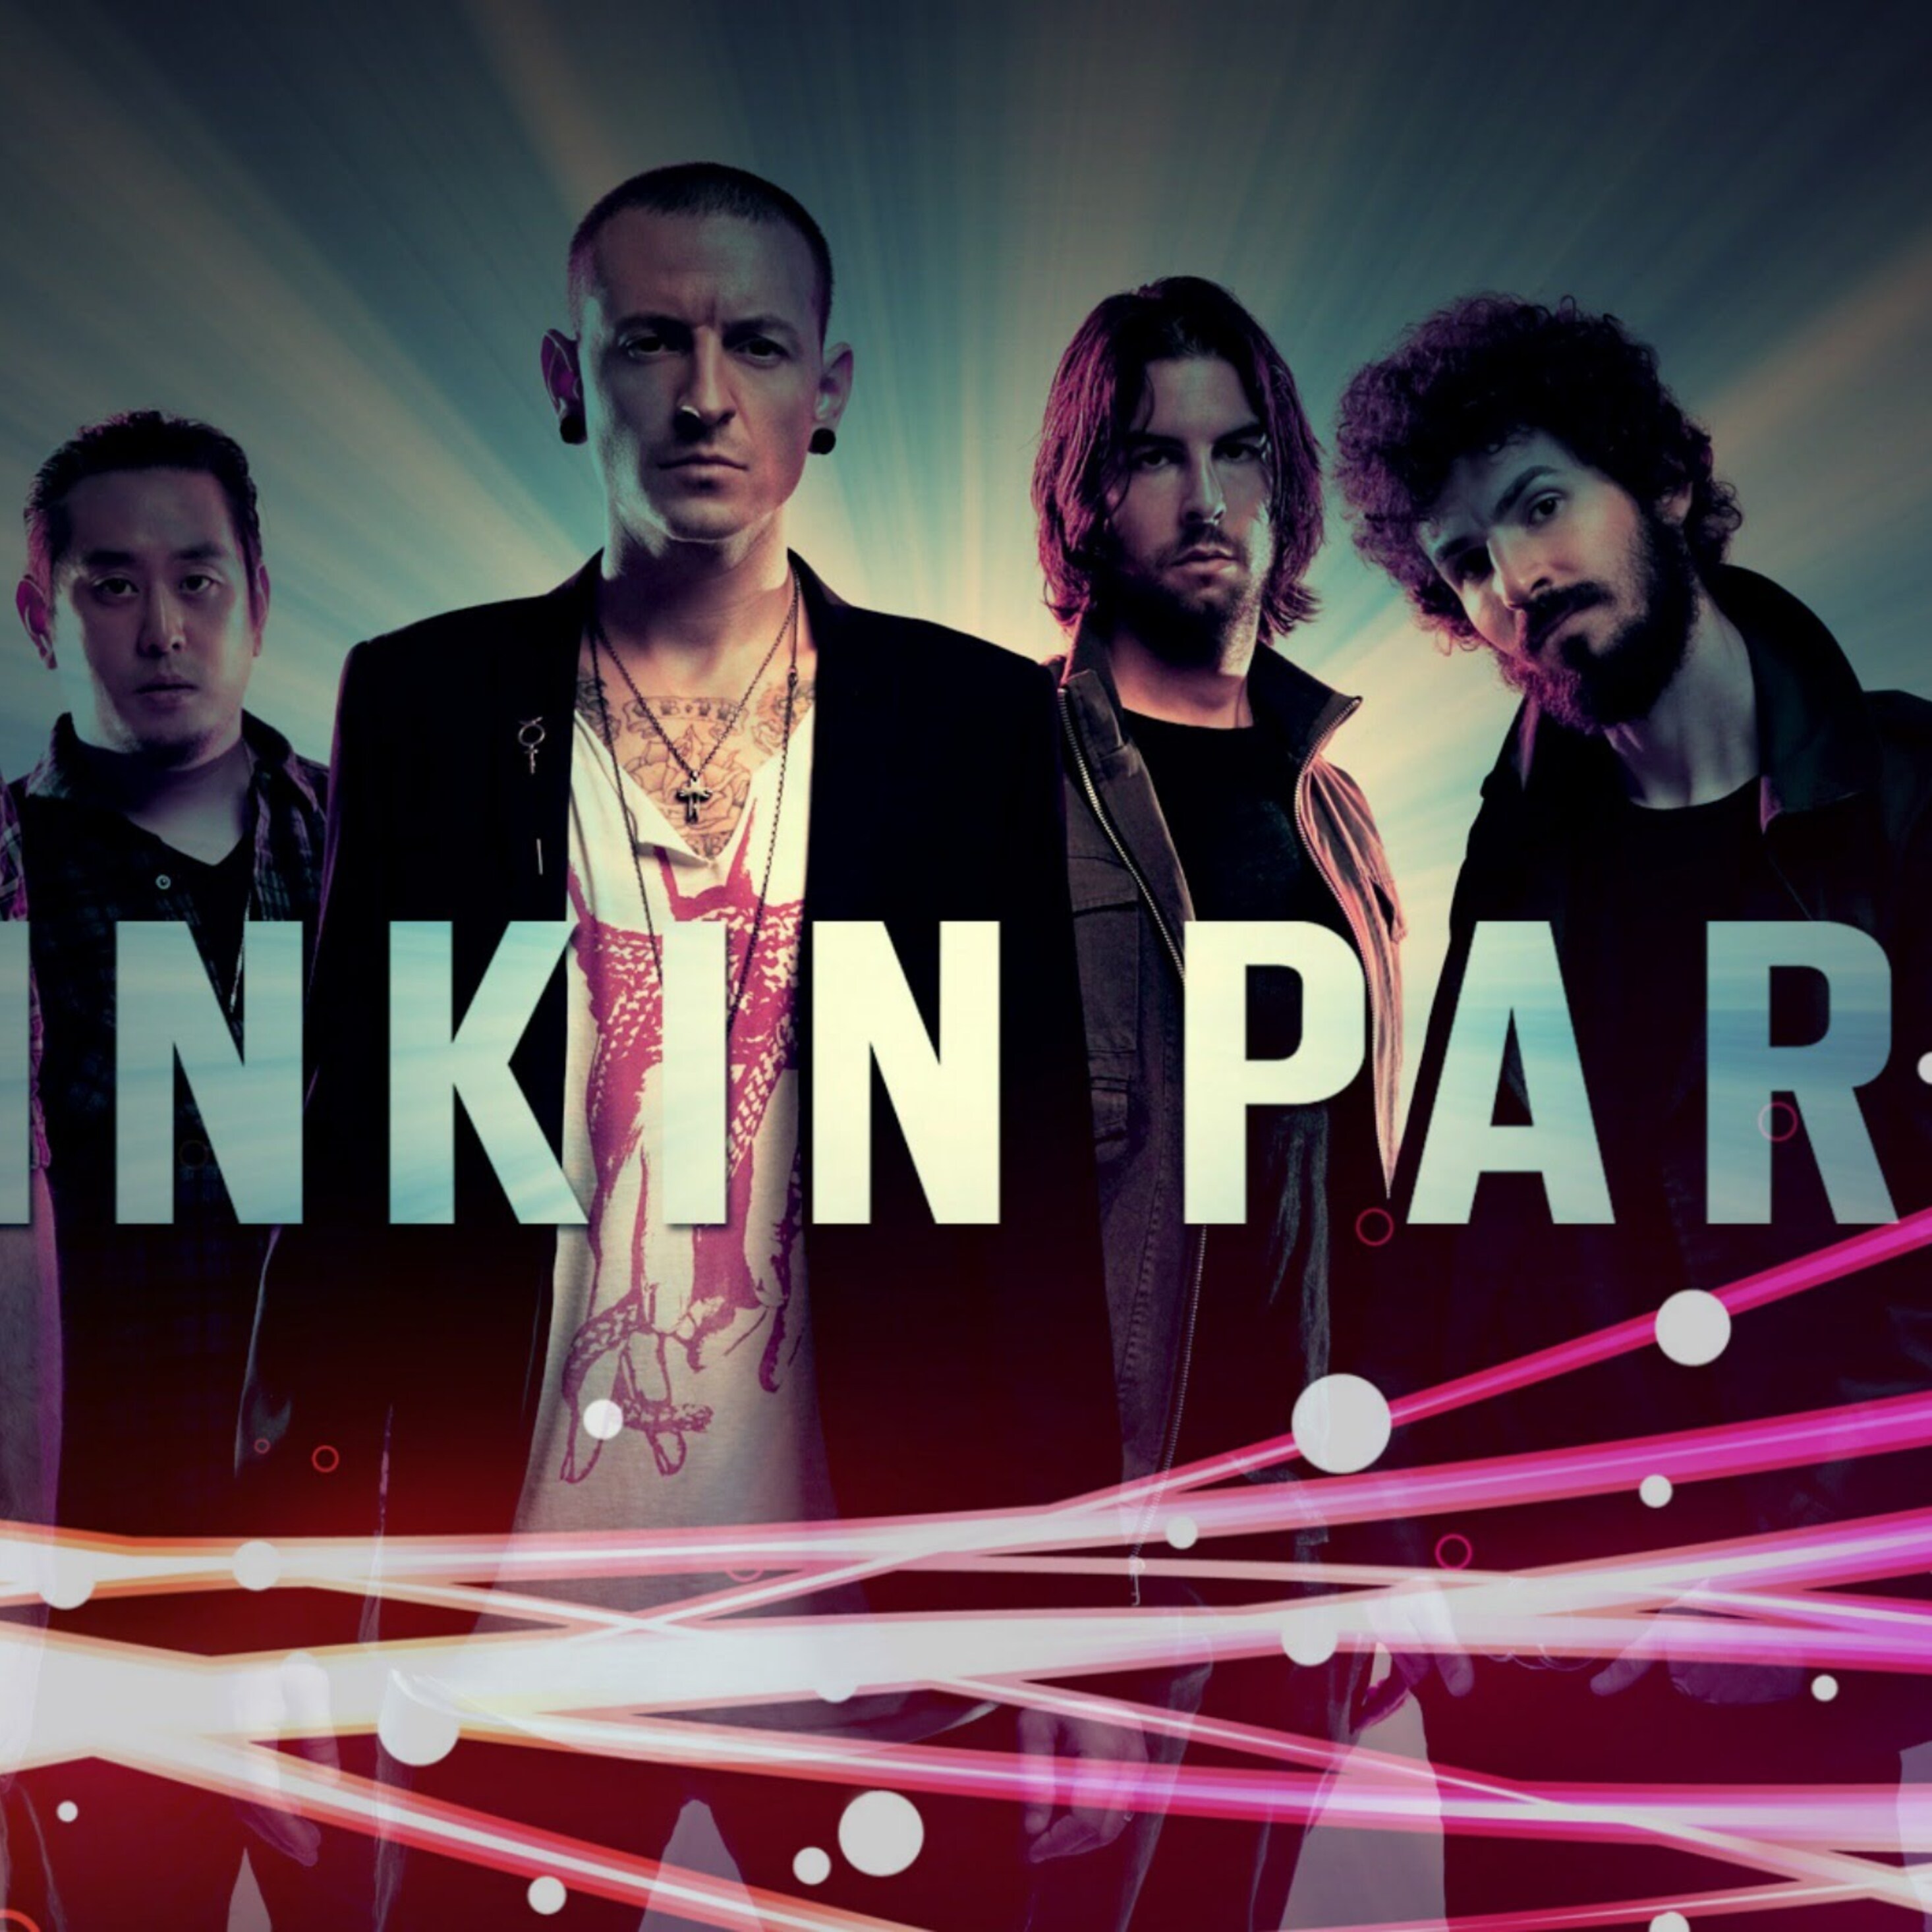 Linkin park tribute. Группа линкин парк. Картинки группы линкин парк. Линкин парк состав группы. Линкольн парк группа.